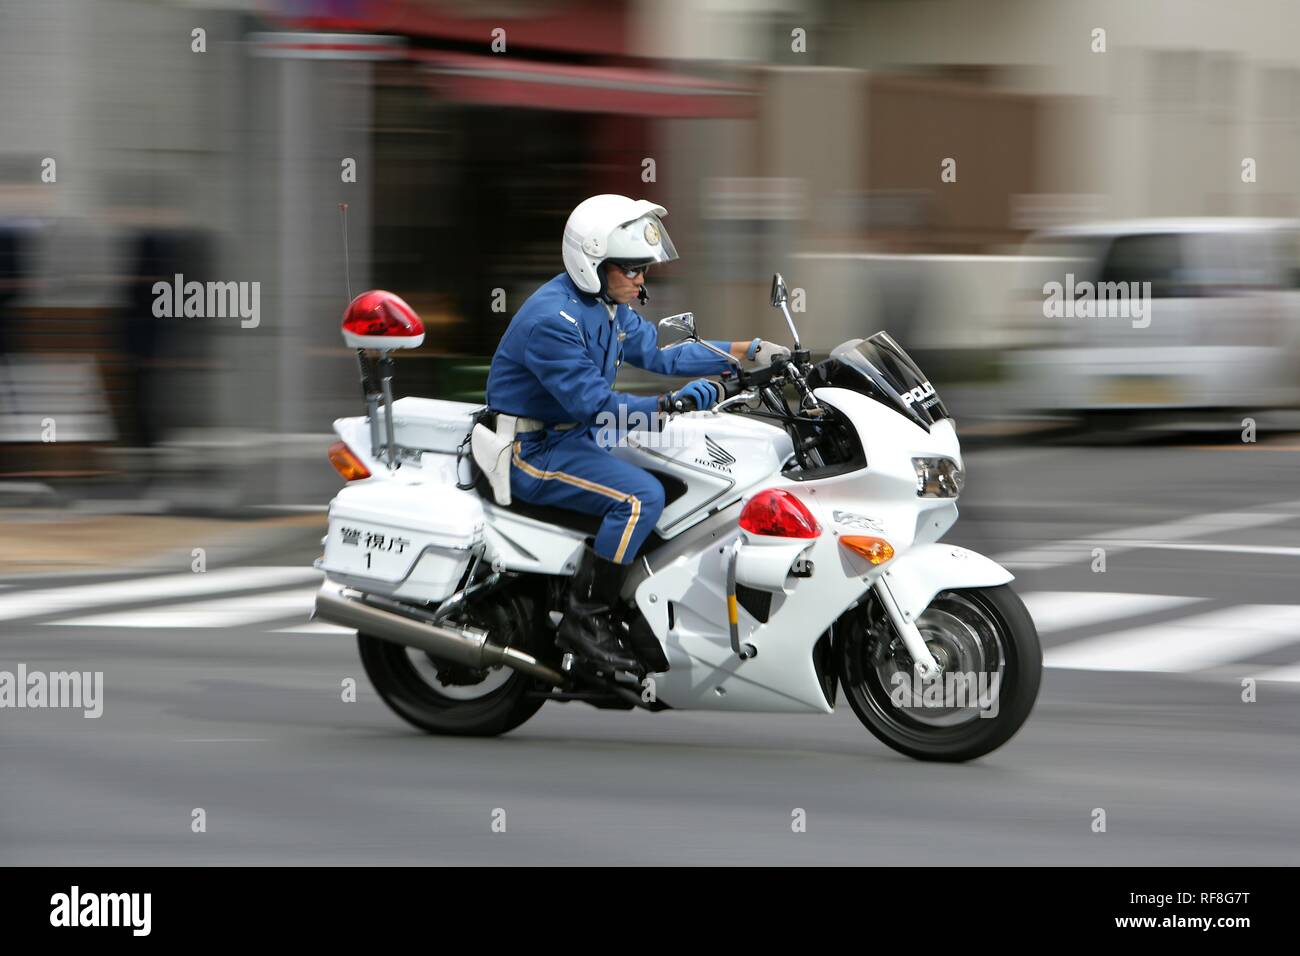 Street scene featuring police motorcycle, Tokyo, Japan, Asia Stock Photo